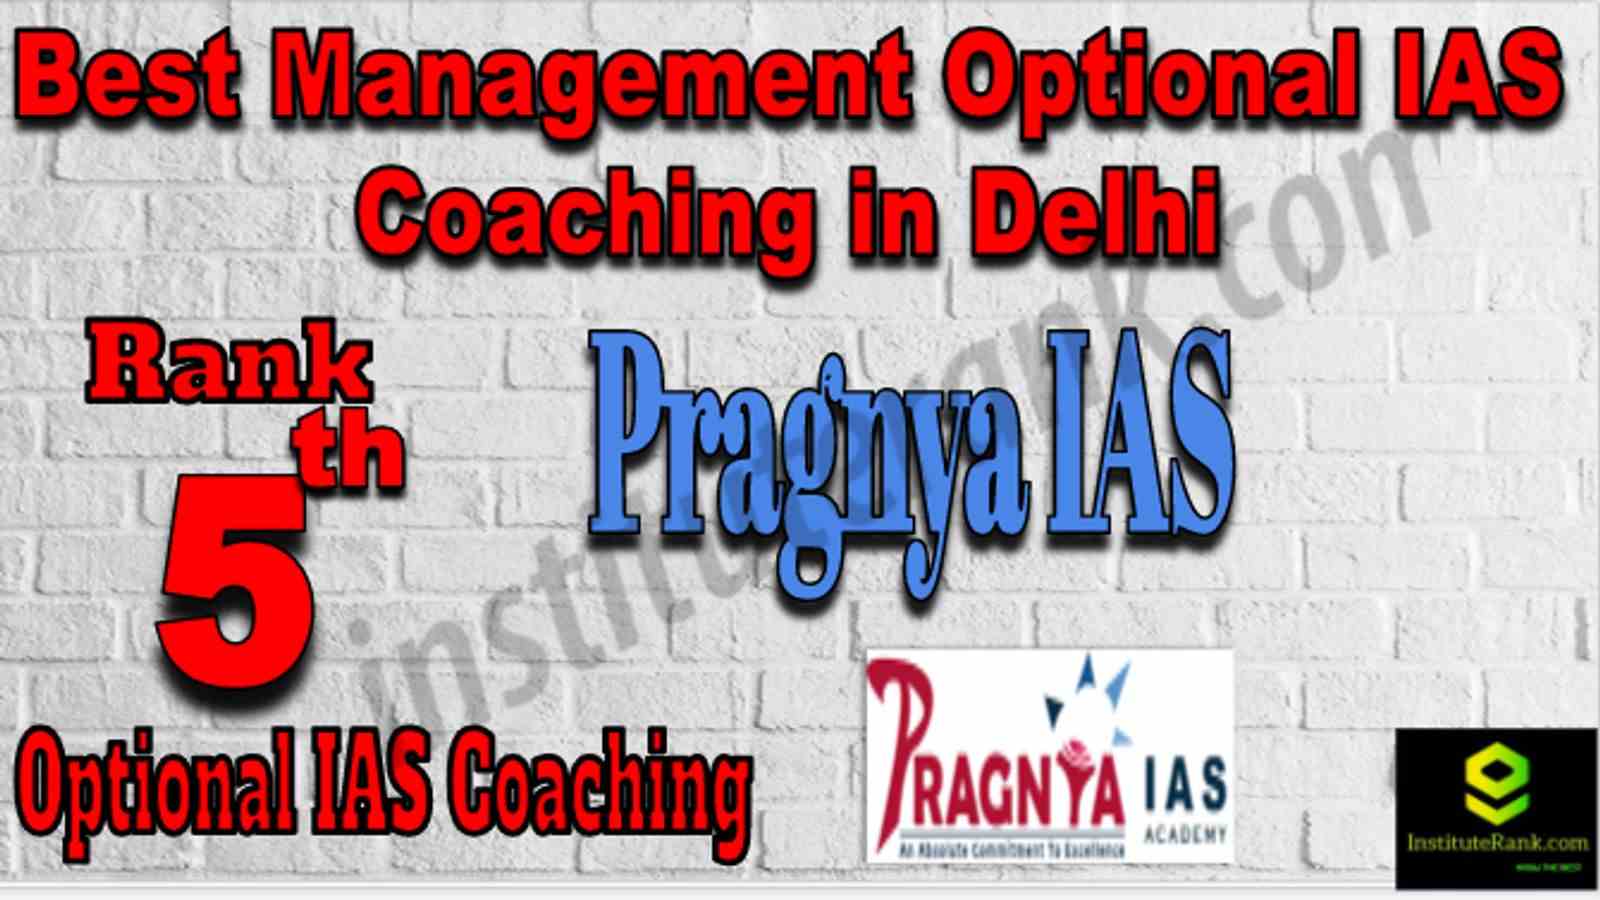 Rank 5 Best Management Optional IAS Coaching in Delhi